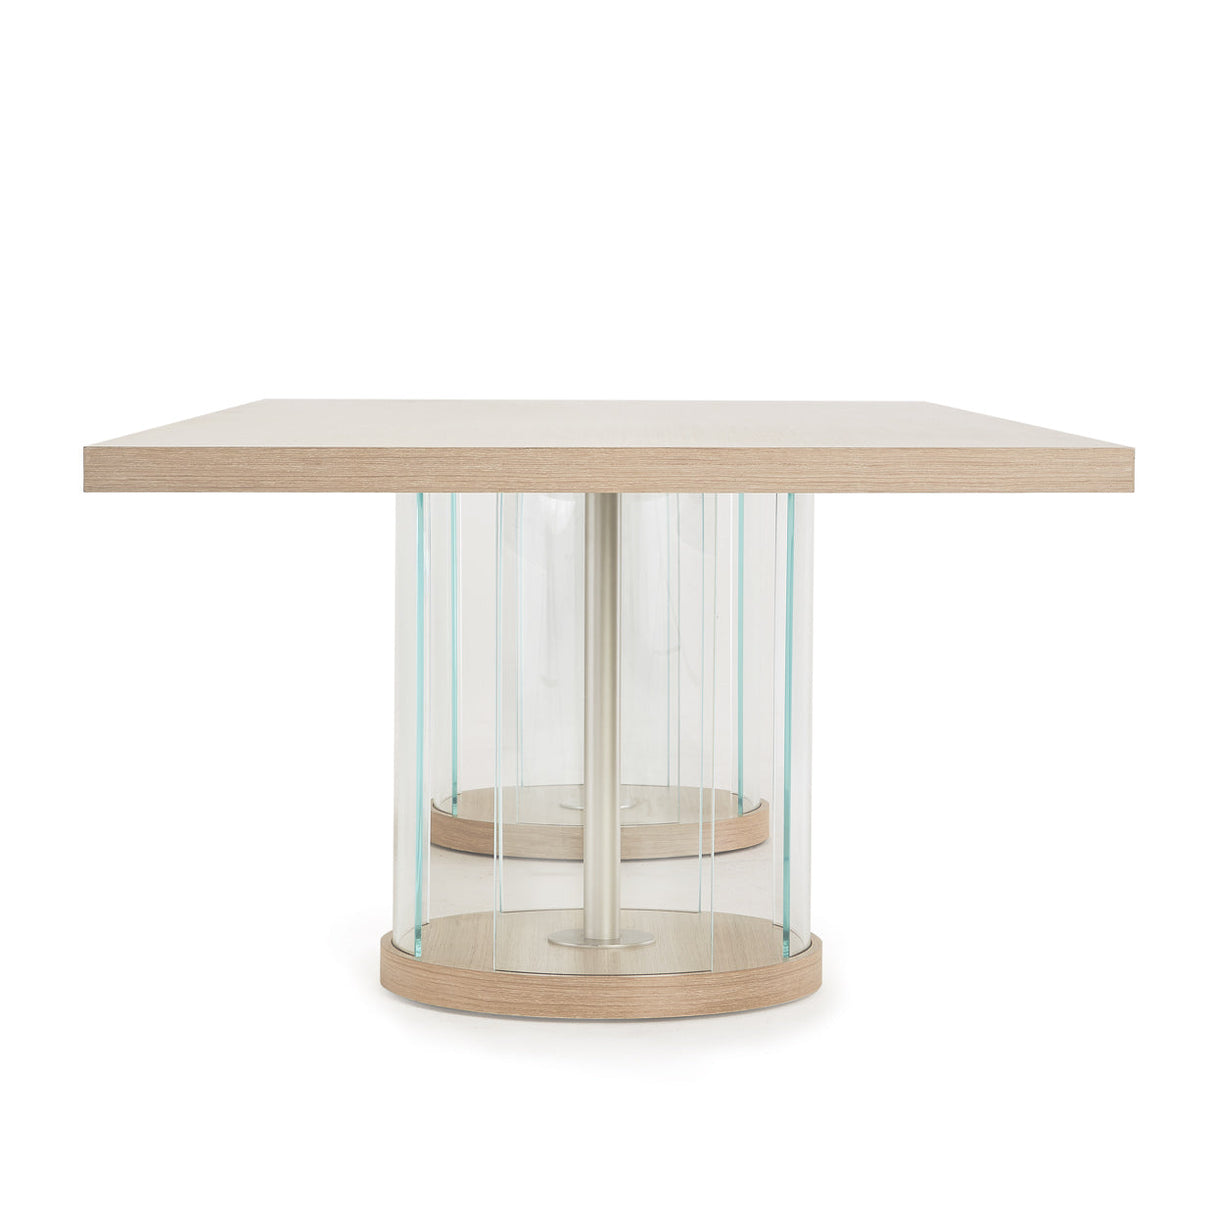 Aico Furniture - Laguna Rectangular Double Pedestal Dining Table In Washed Oak - 9083002-129